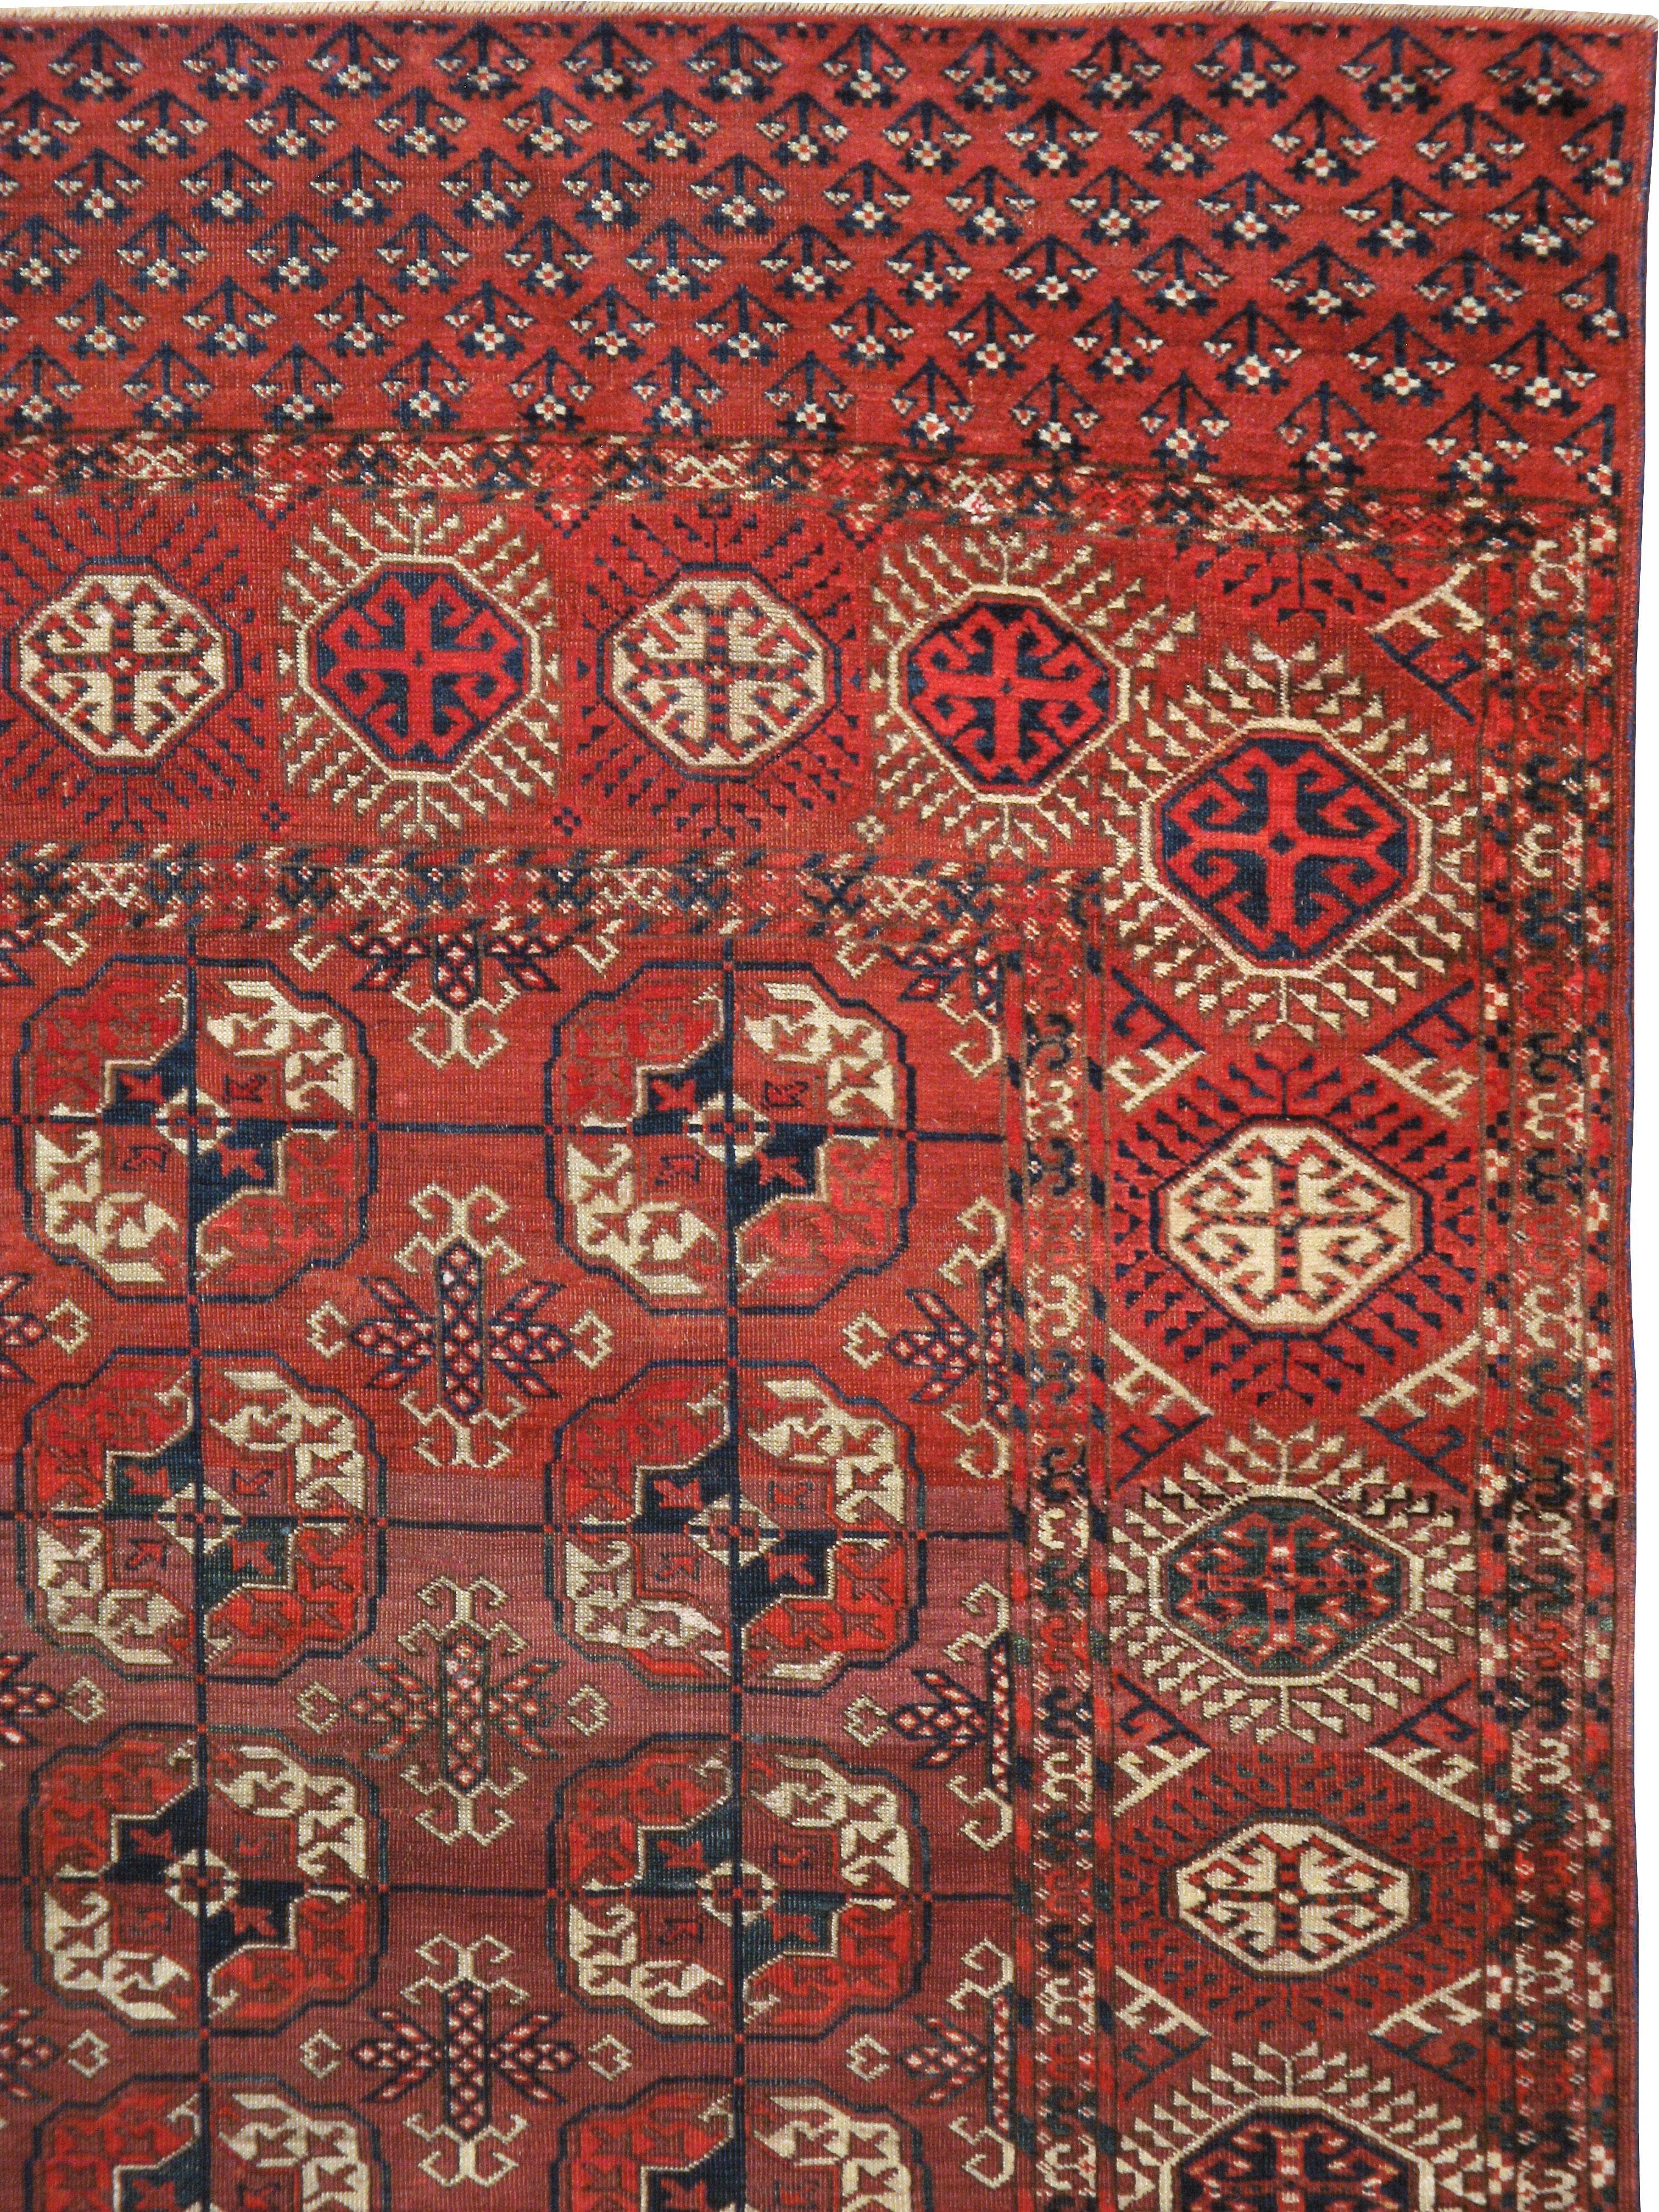 Hand-Knotted Antique Central Asian Tekke Carpet For Sale